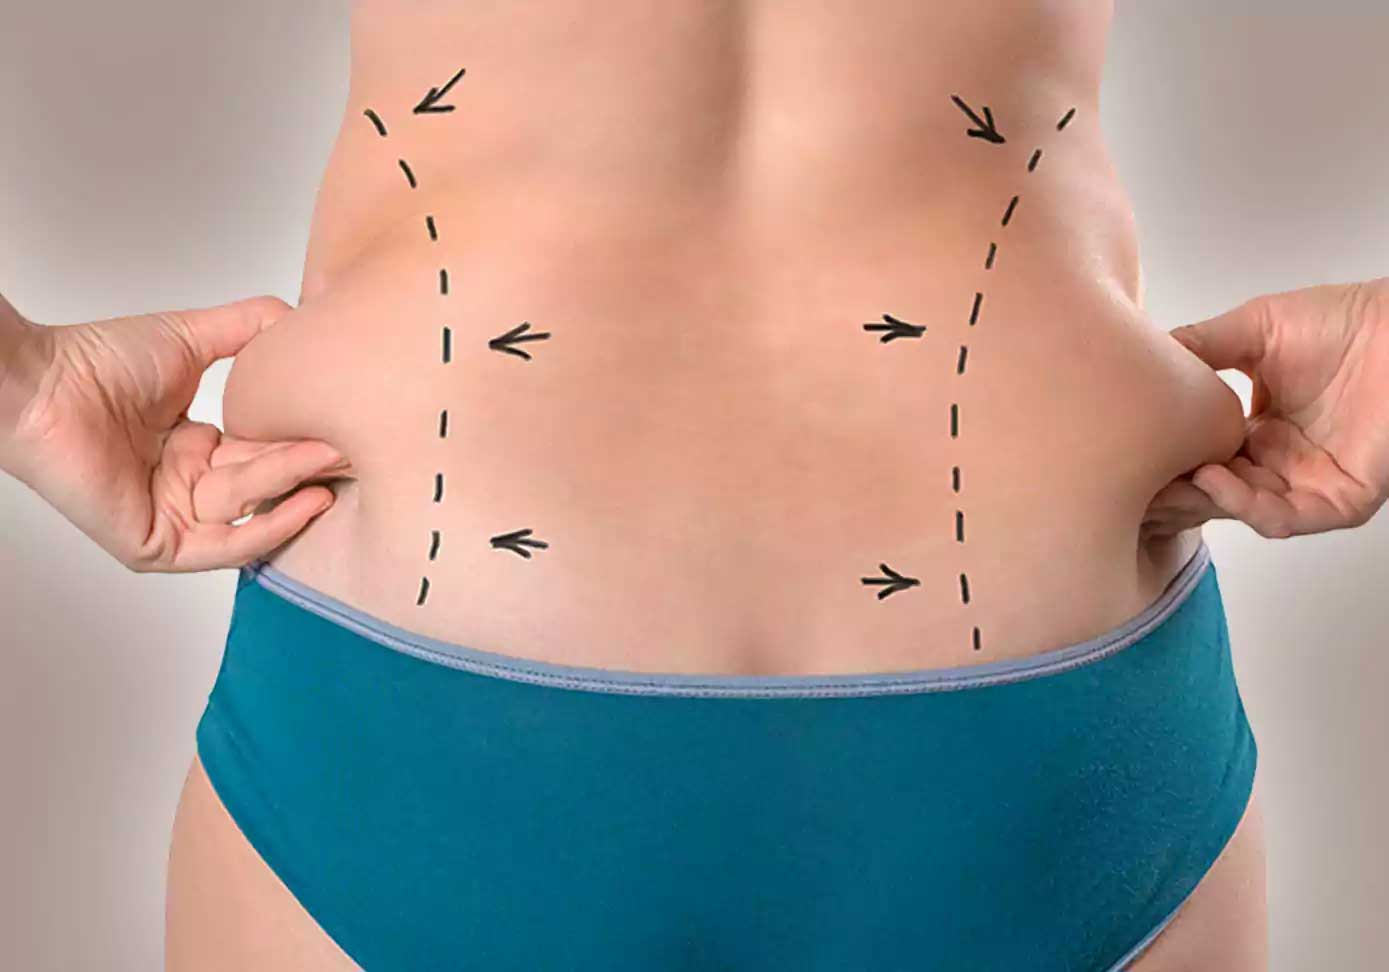 liposuction in iran